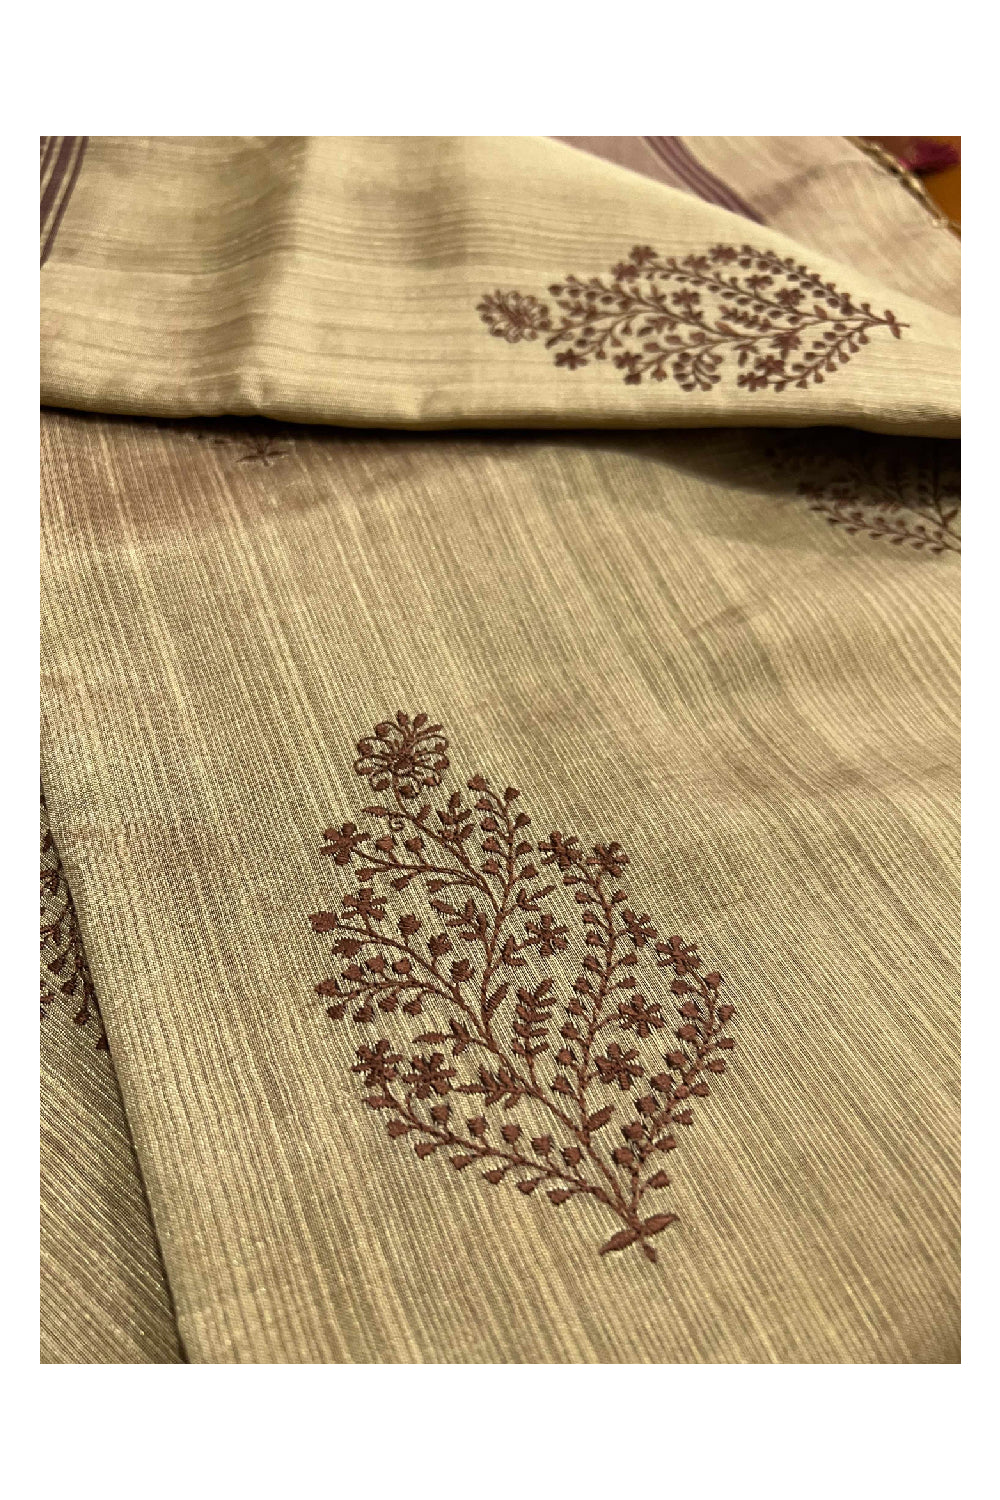 Southloom Light Brown Semi Tussar Thread Work Designer Saree with Tassels on Pallu